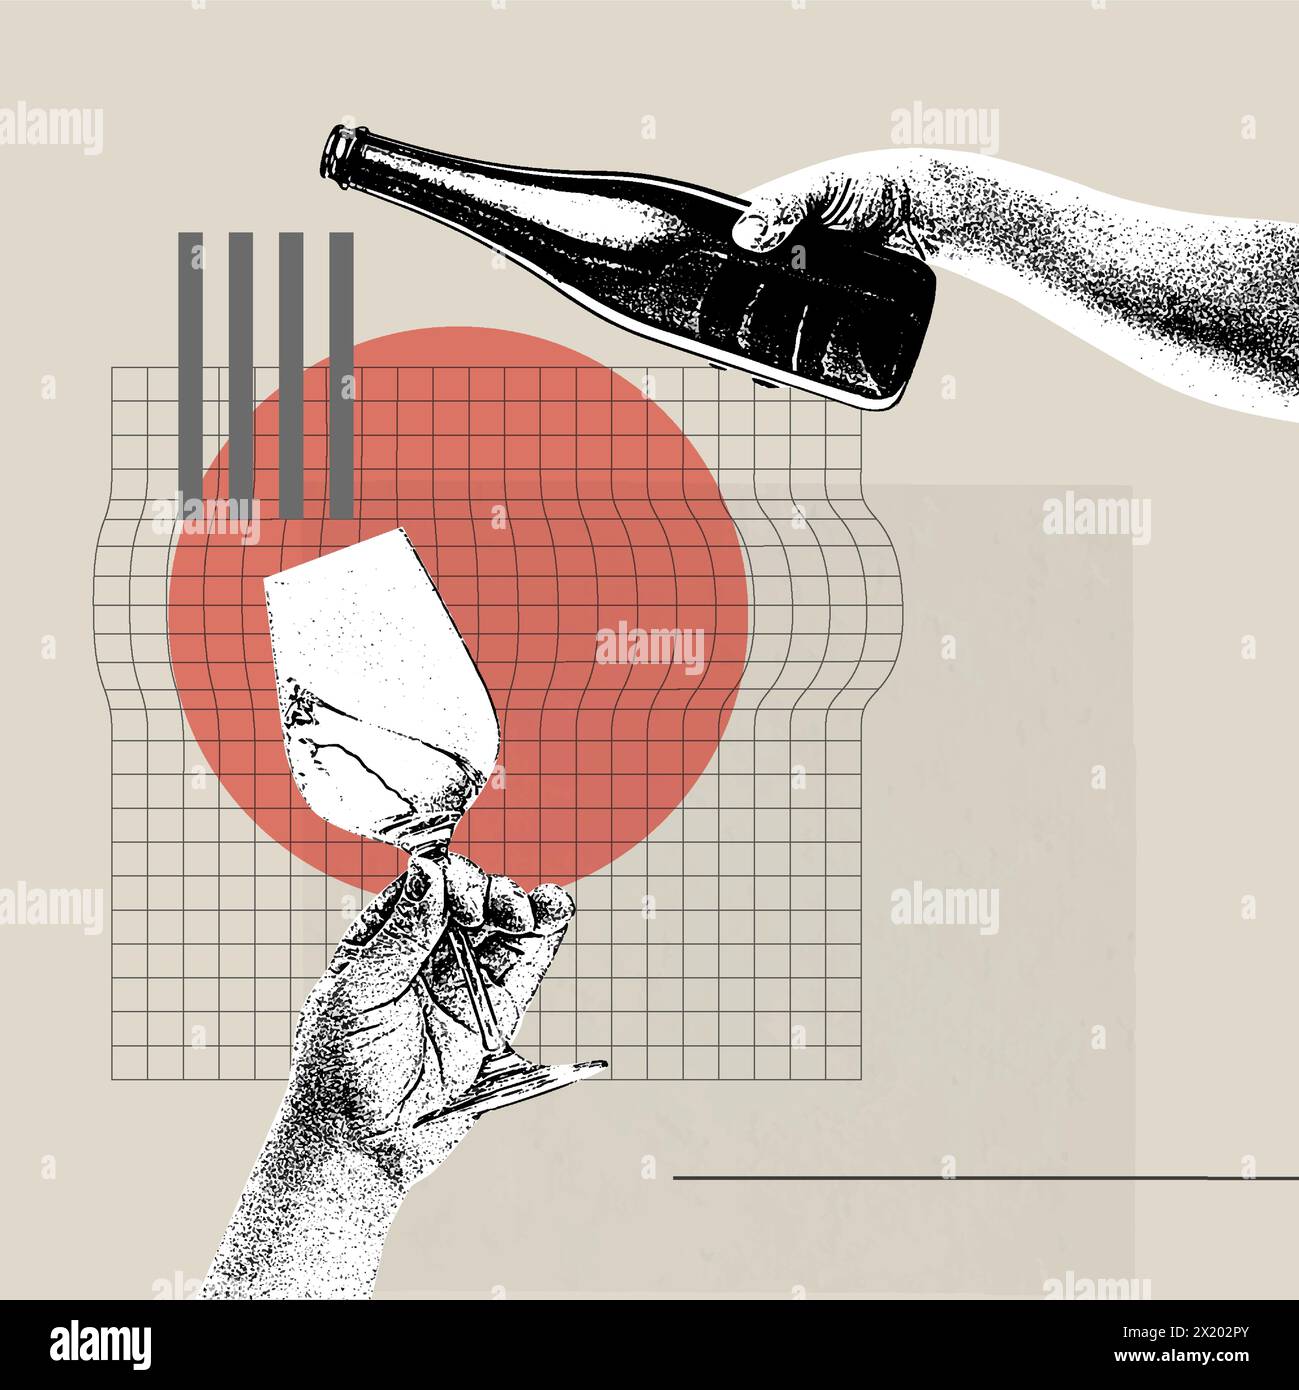 Vector illustration. Contemporary art collage. Conceptual image. Wine pouring into glass. Degustation. Retro design. Take a break and drink wine. Stock Vector